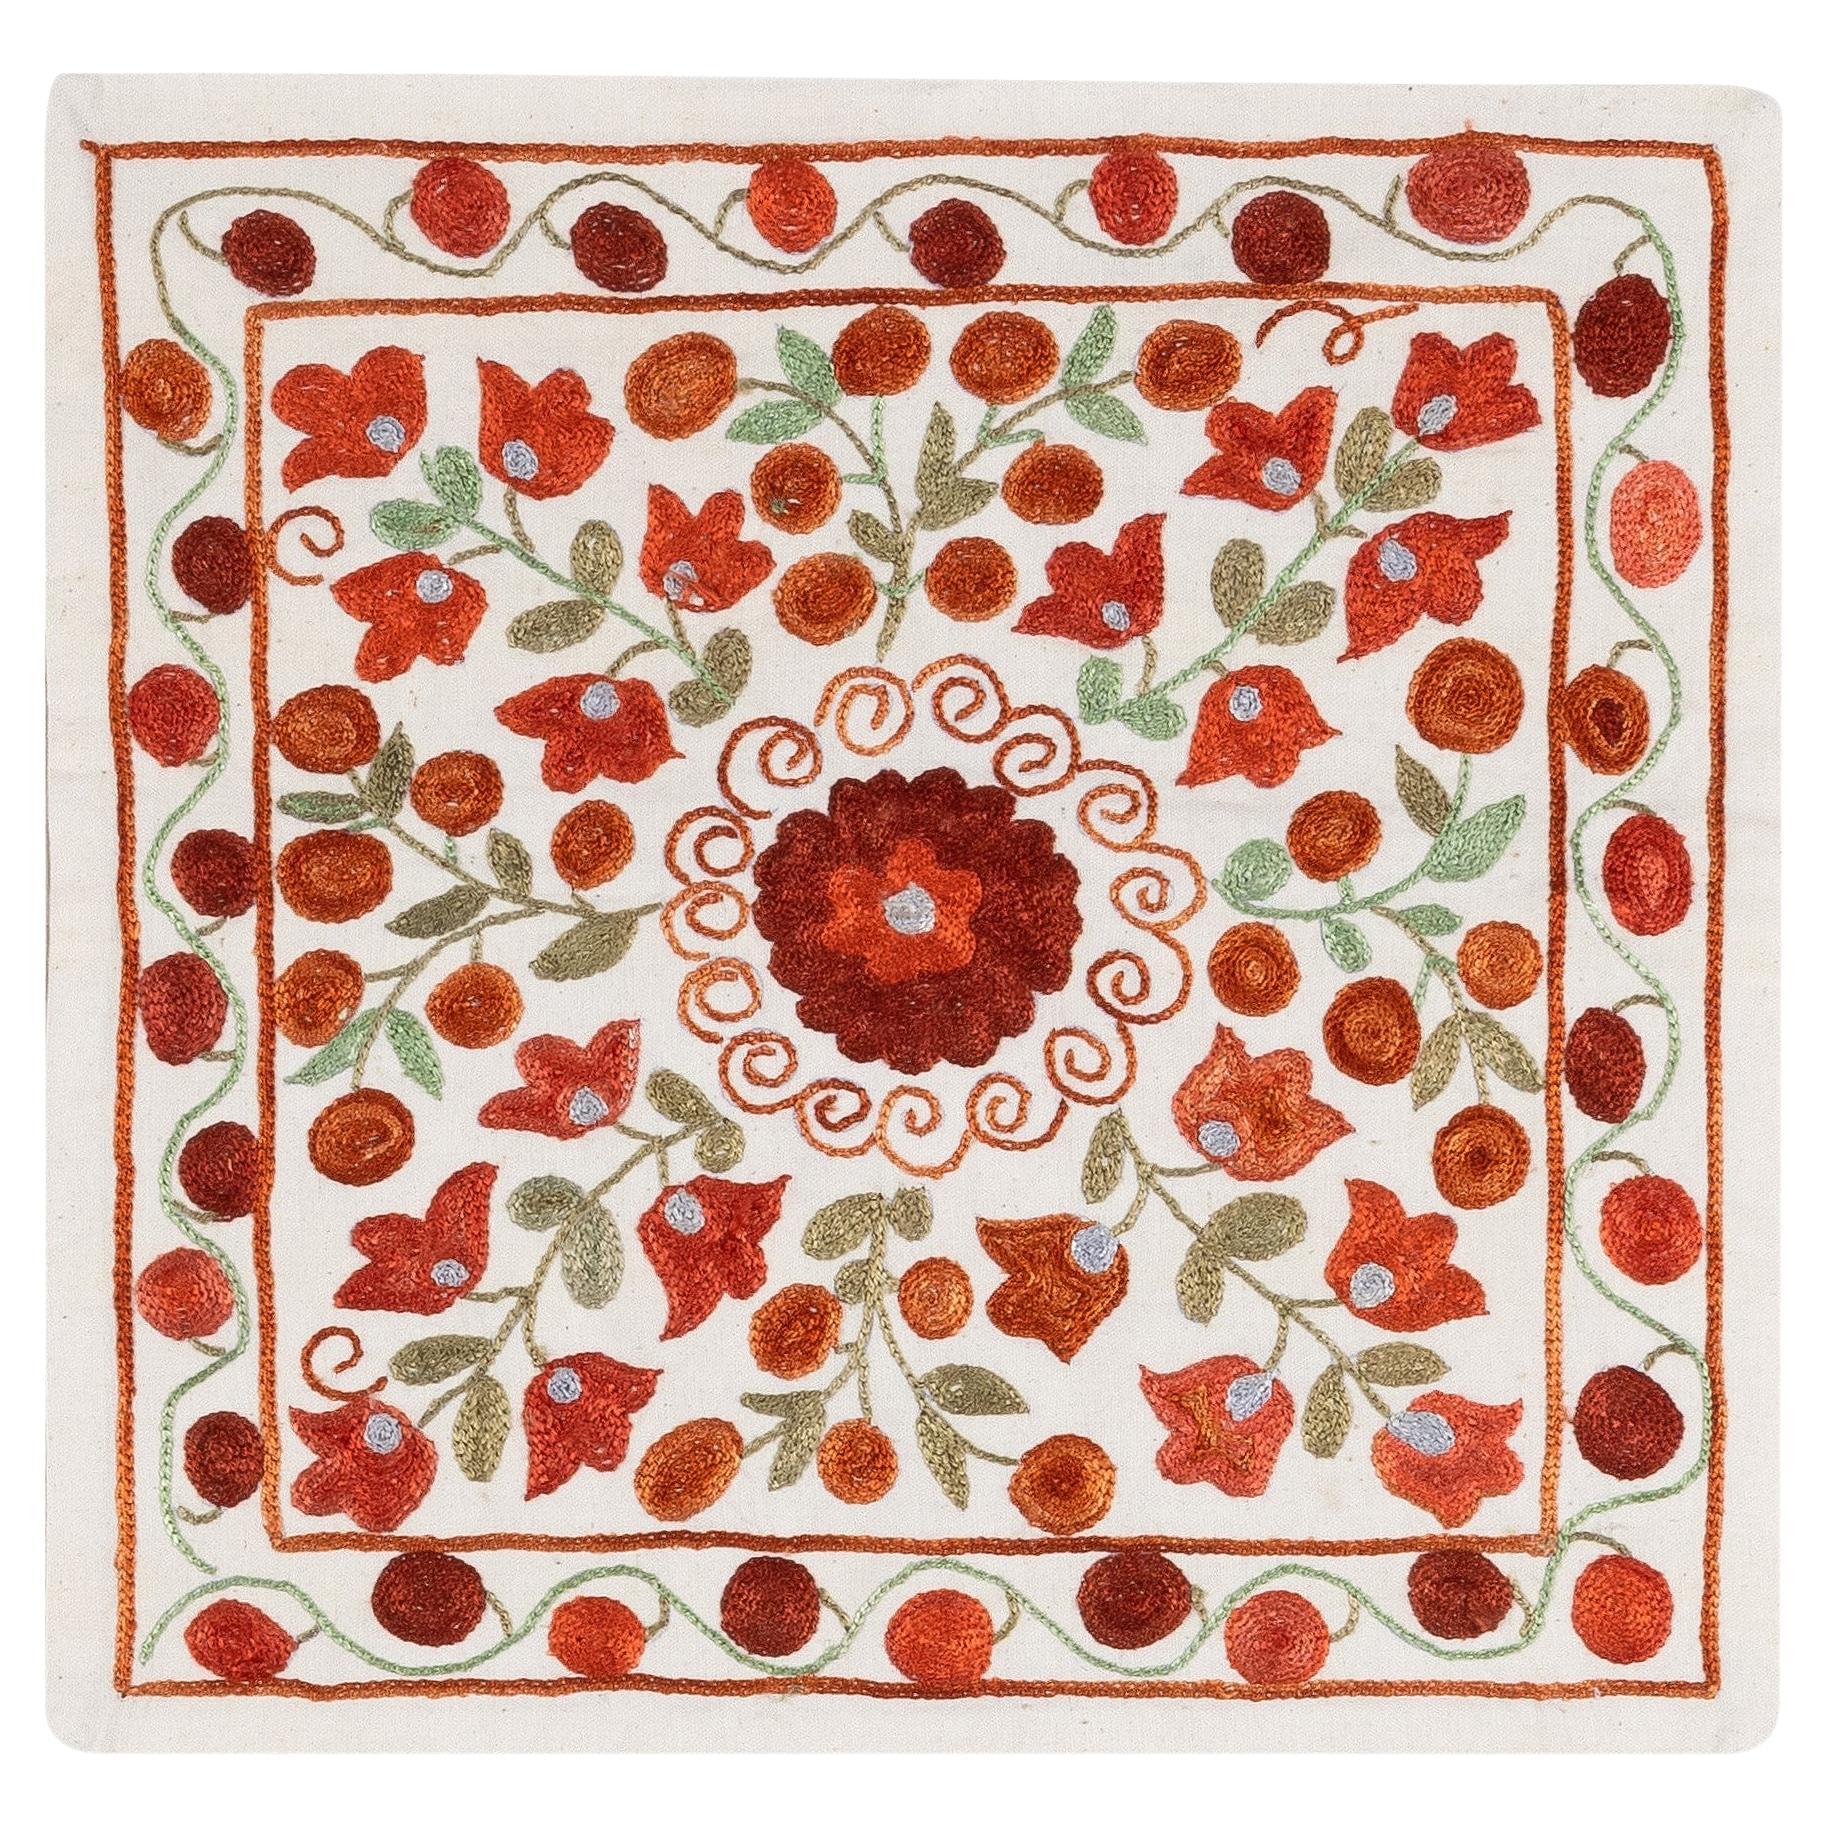 16"x17" Handmade New Central Asian / Uzbek Silk Embroidered Suzani Cushion Cover